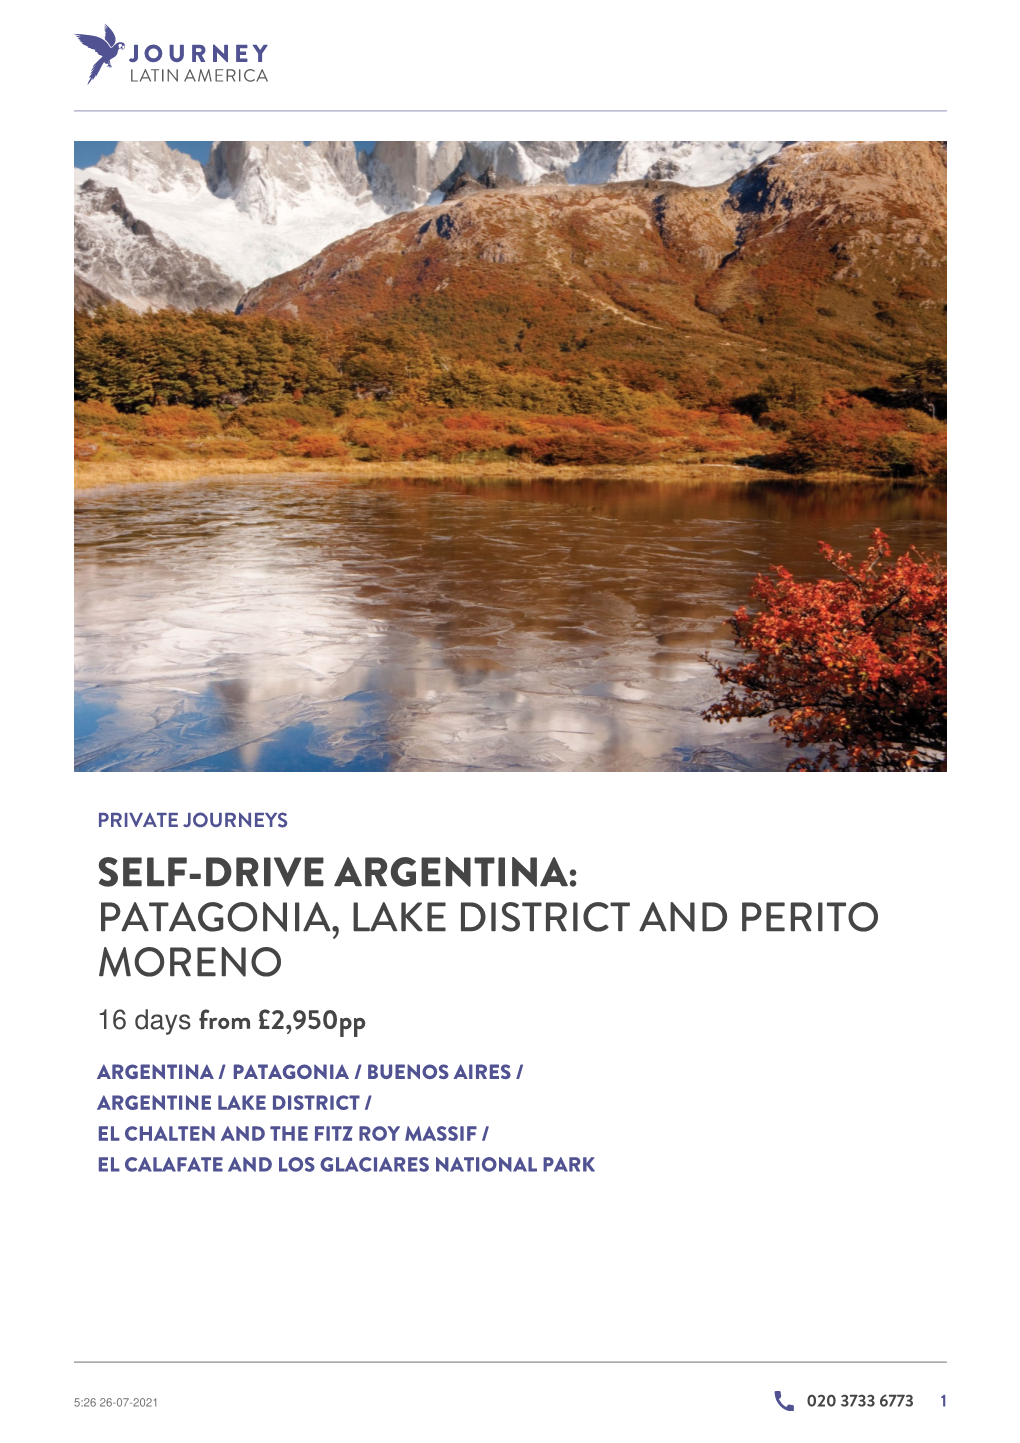 Patagonia, Lake District and Perito Moreno